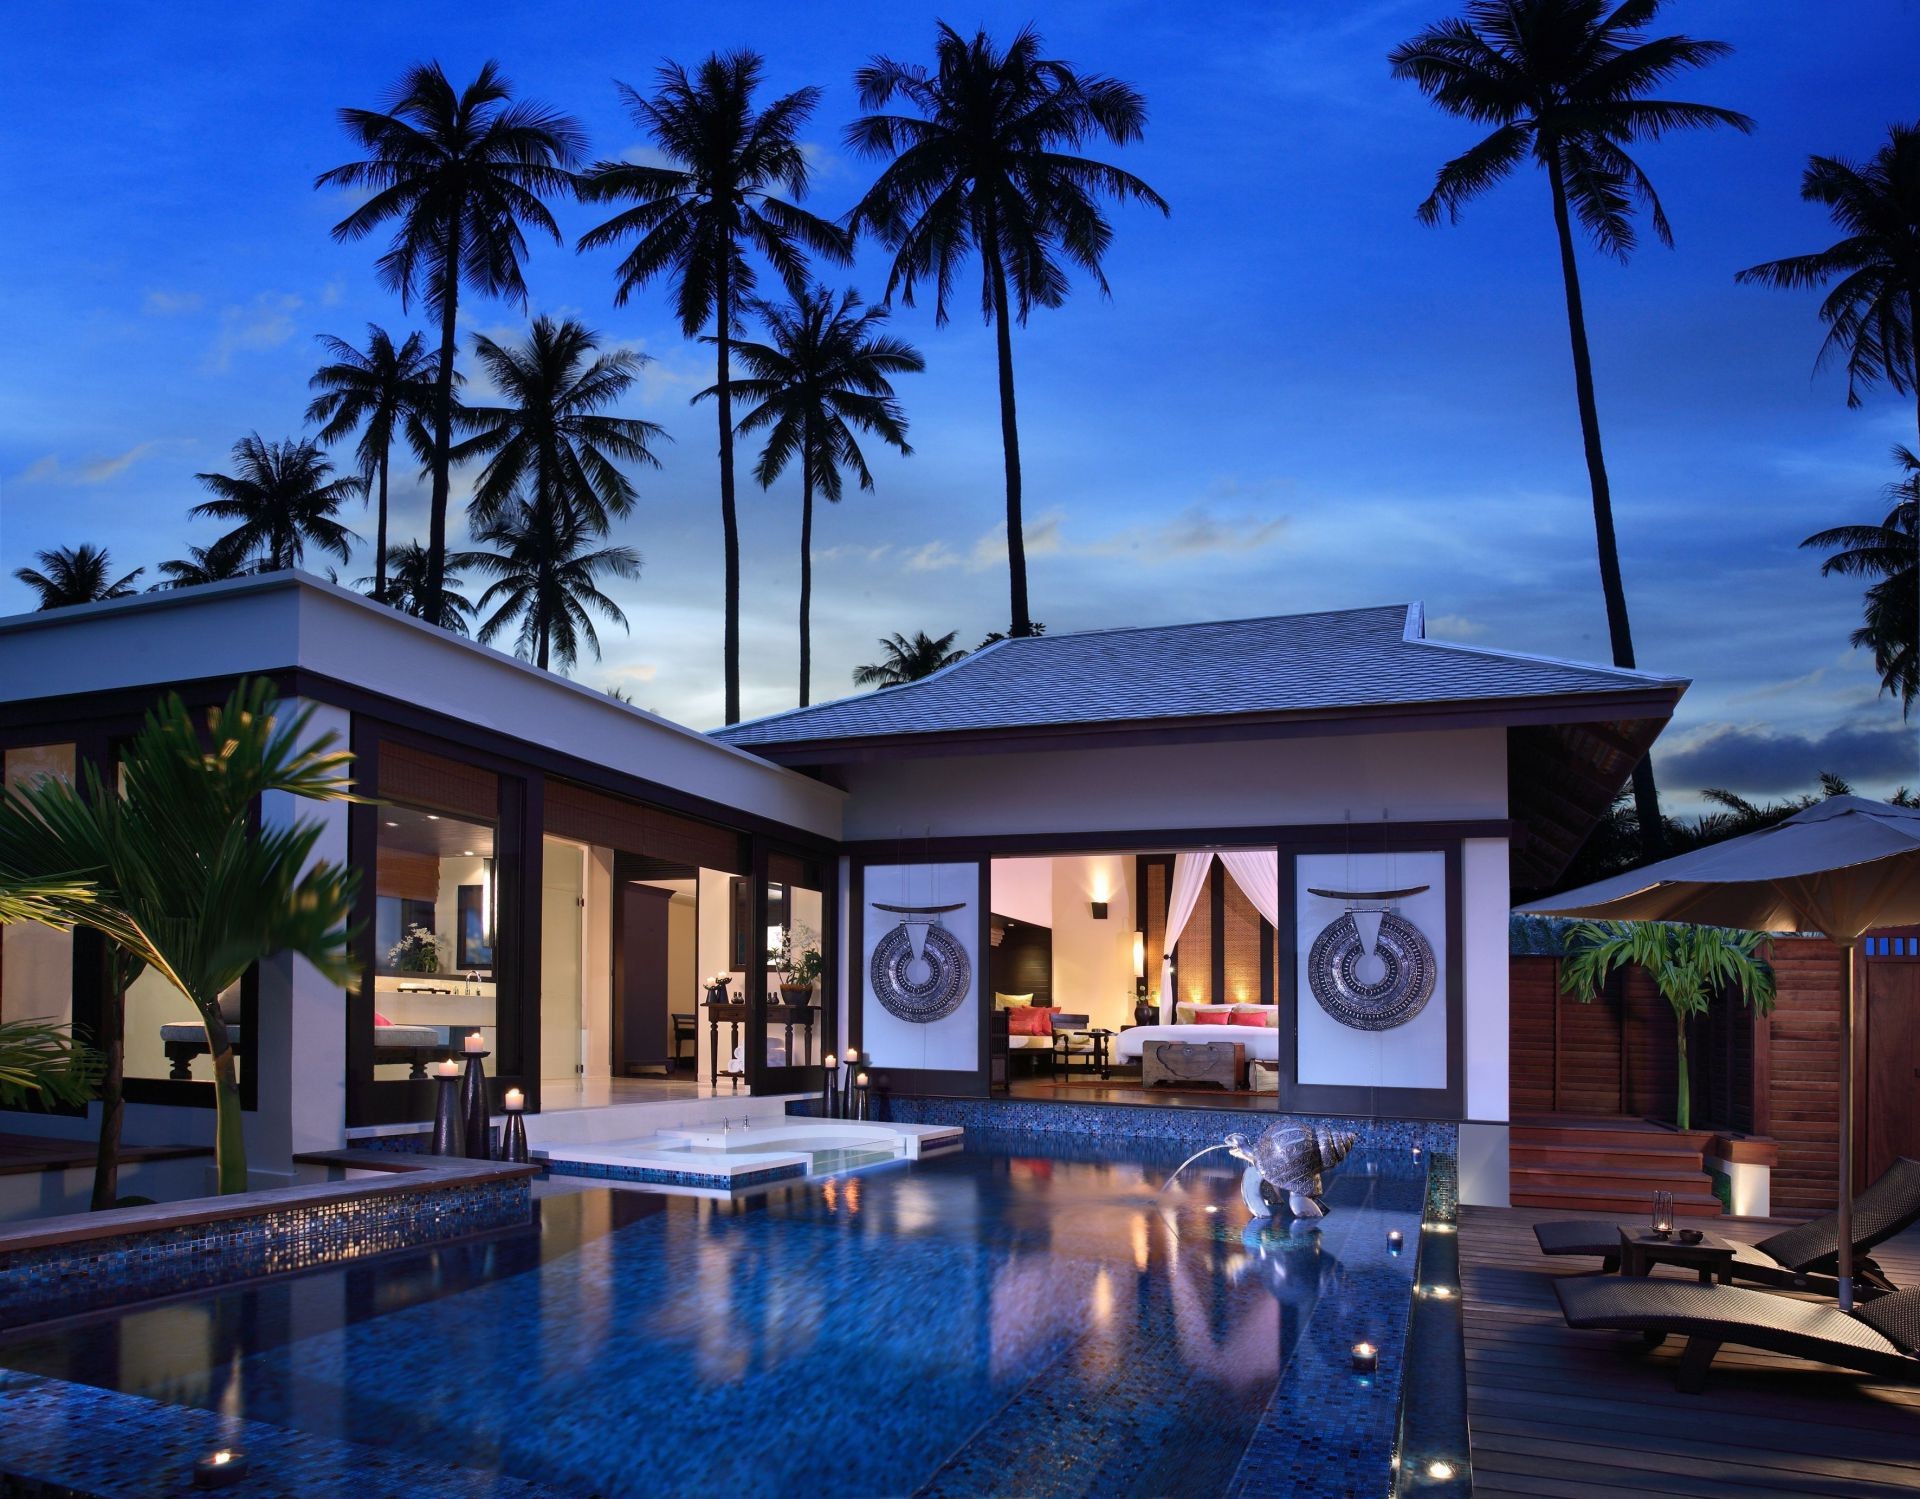 pools hotel palm resort pool luxury swimming pool vacation beach tropical travel chair coconut seashore island paradise ocean exotic villa poolside